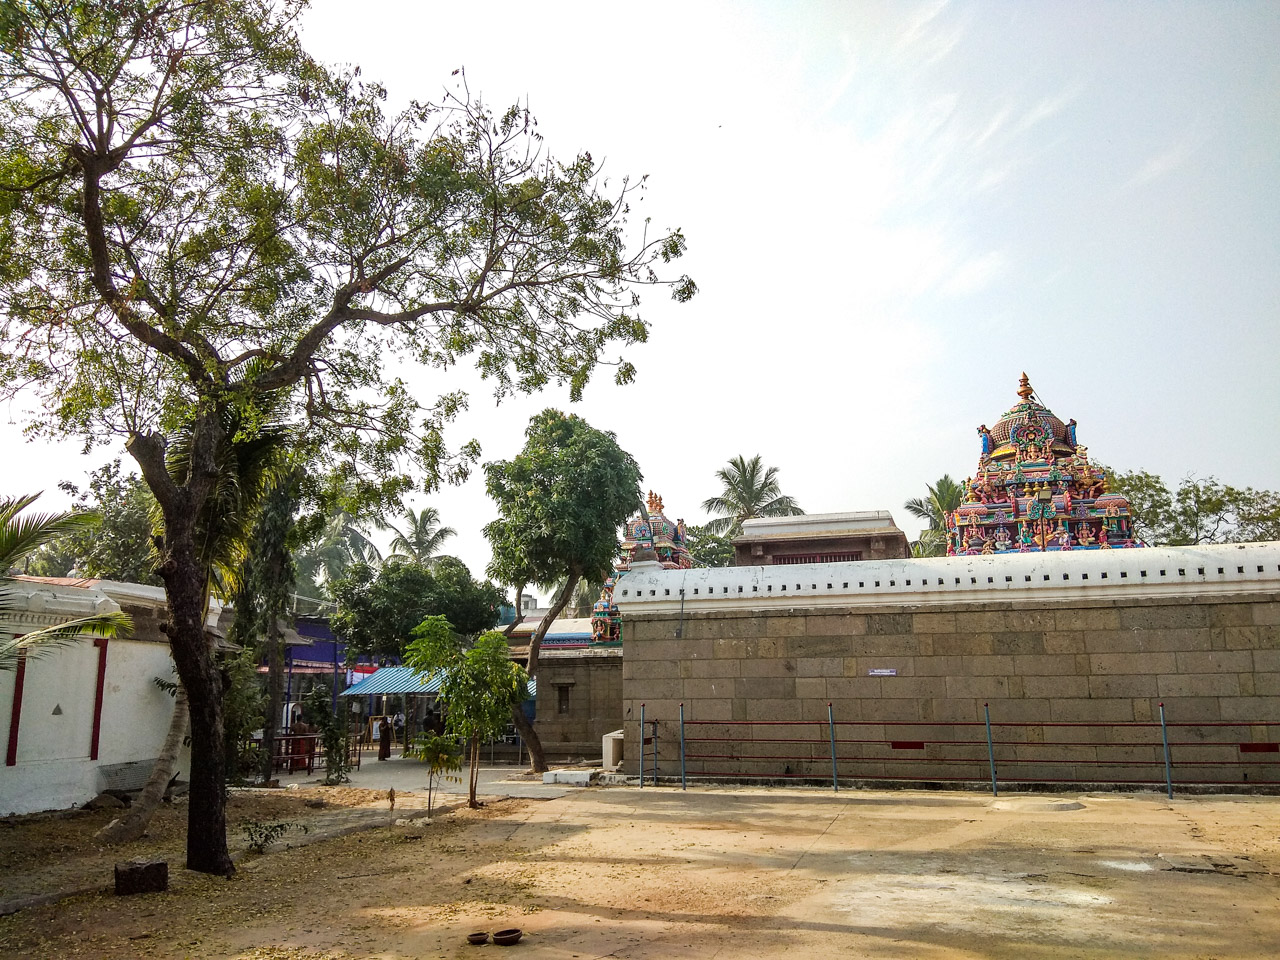 Sri Marundeeswarar Temple at Thiruvanmiyur in Chennai